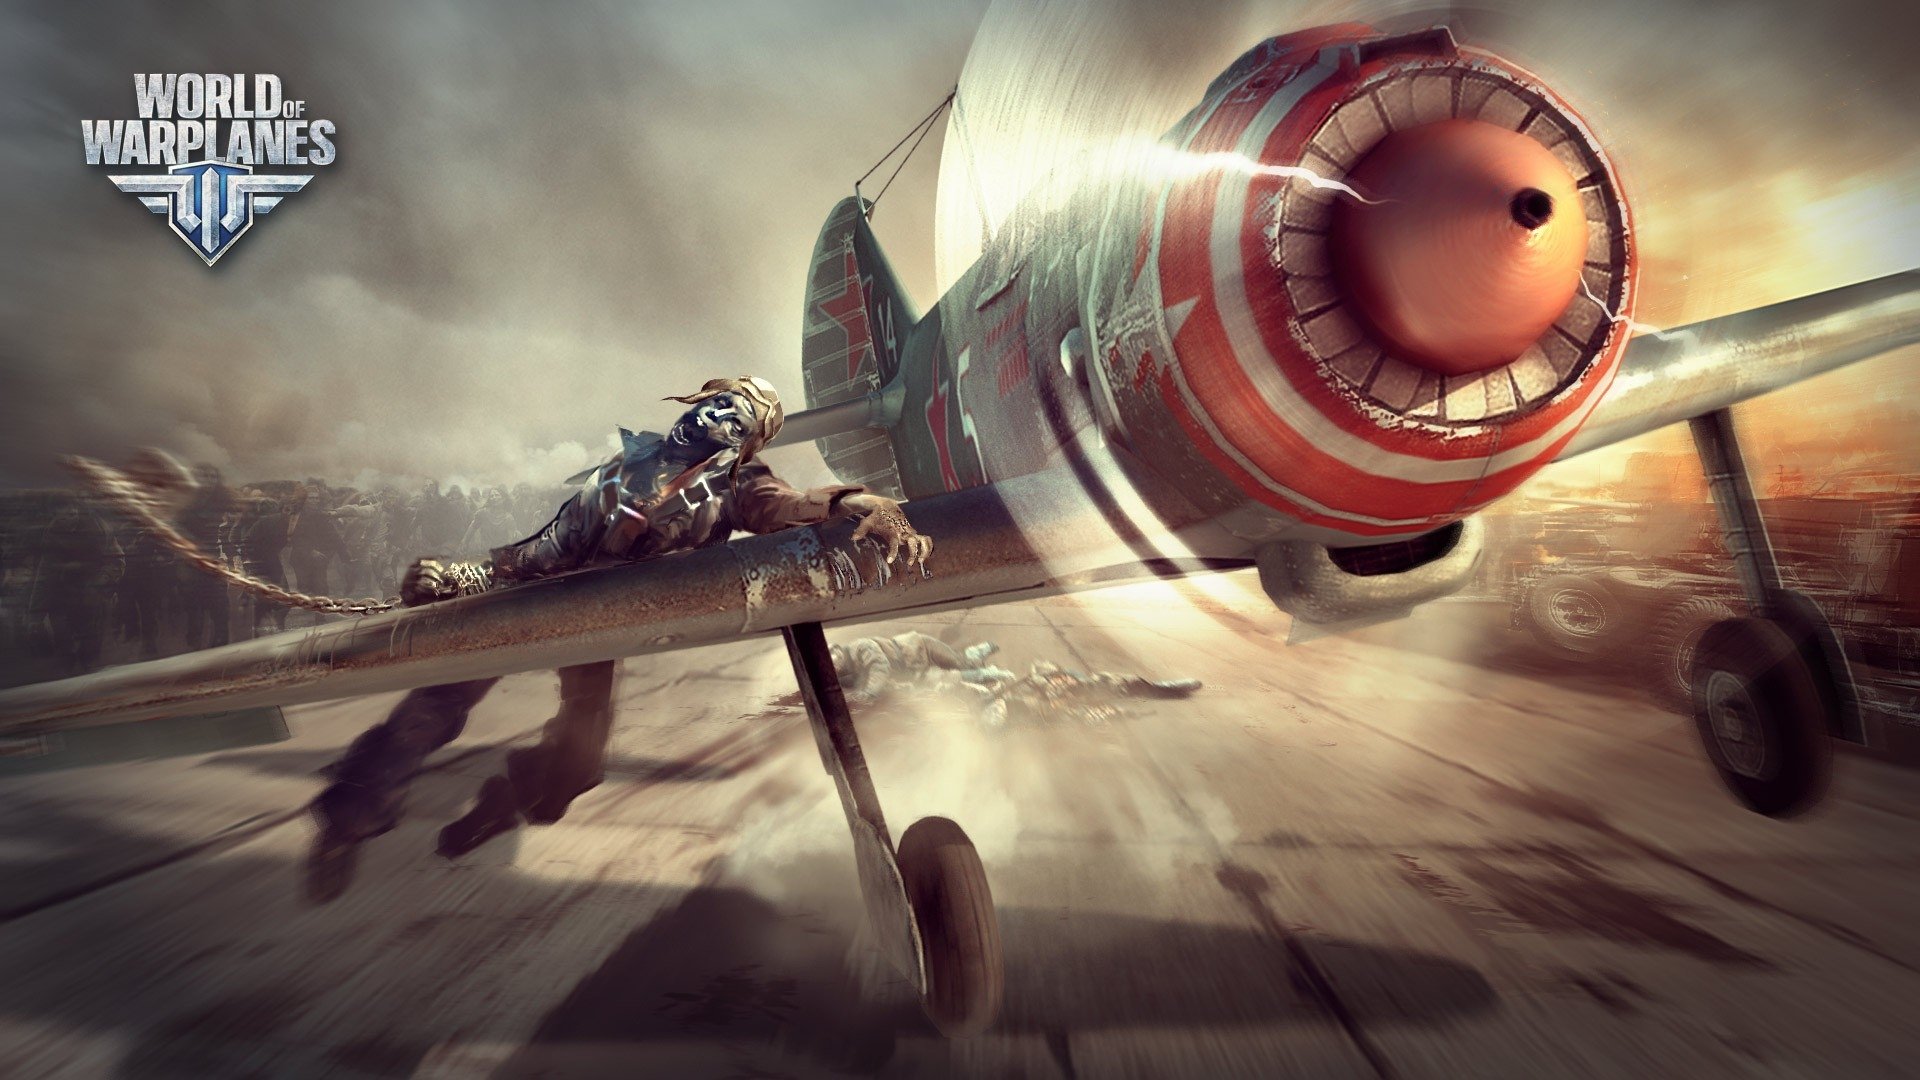 World Of Warplanes Backgrounds on Wallpapers Vista